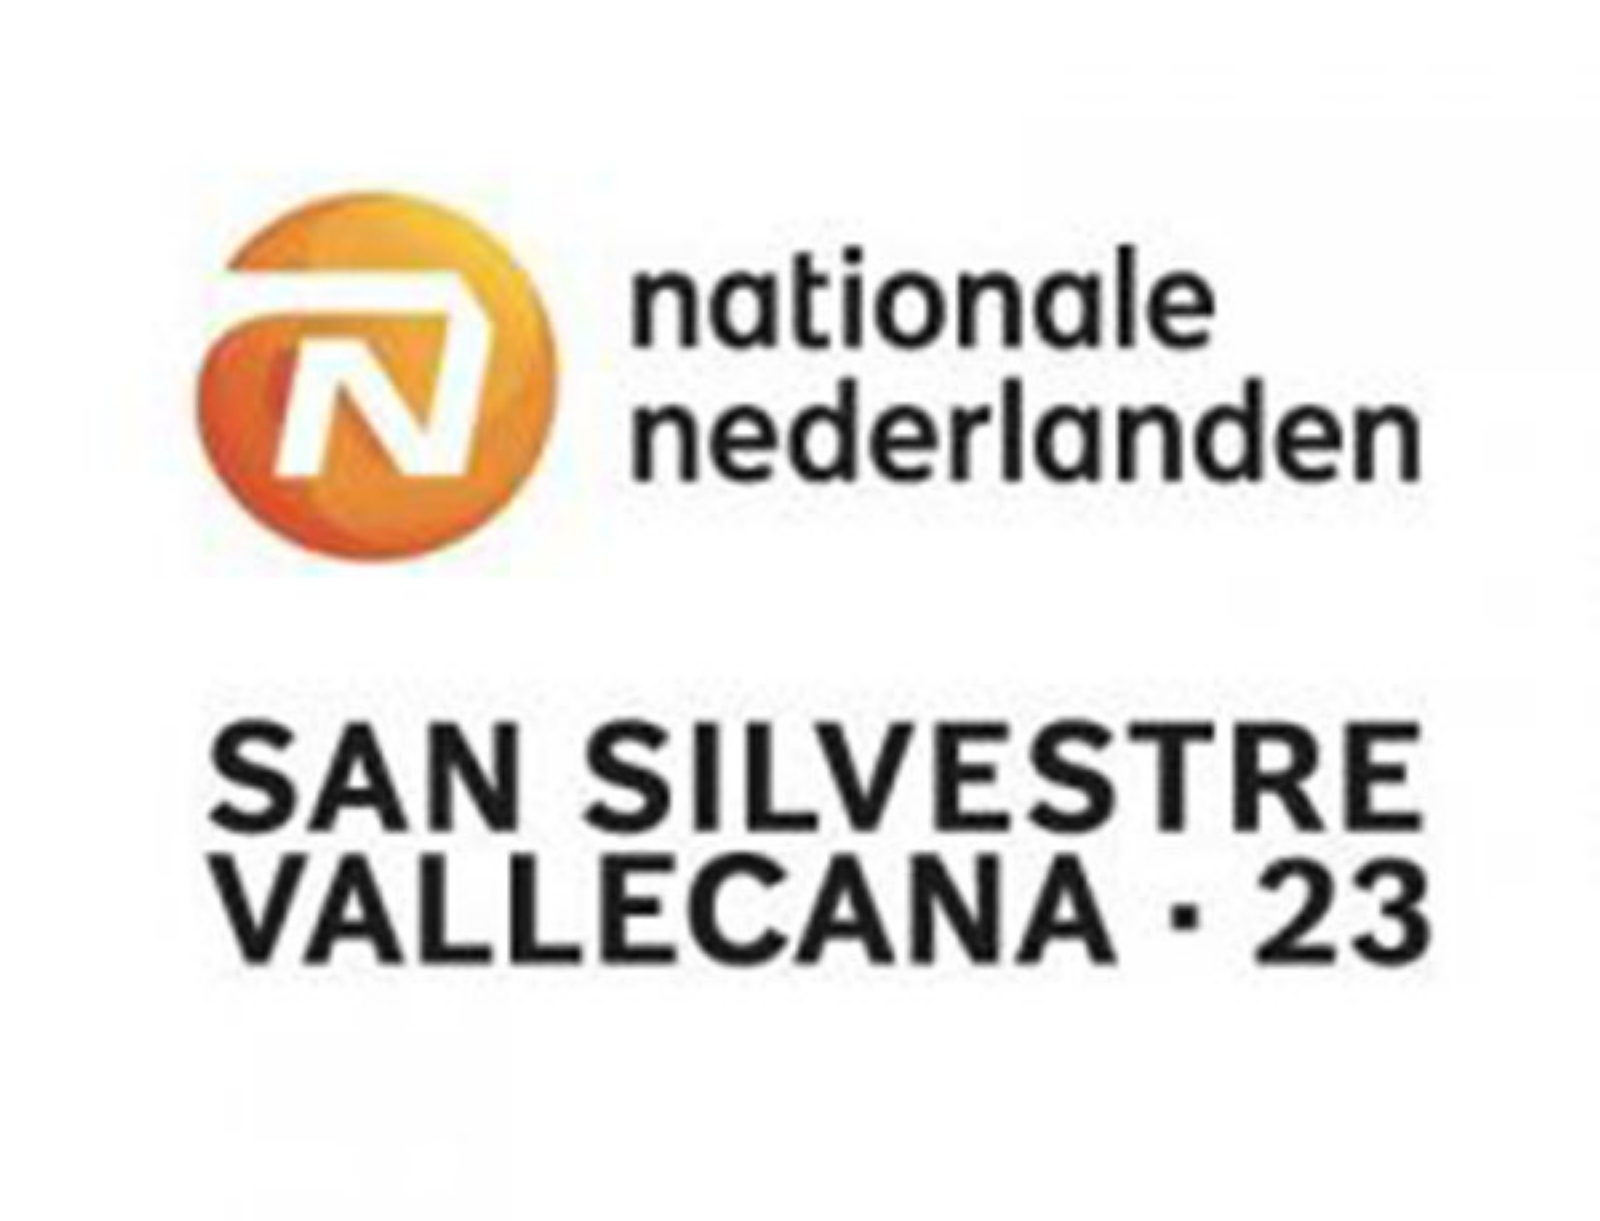 La 59ª Nationale-Nederlanden San Silvestre Vallecana Internacional